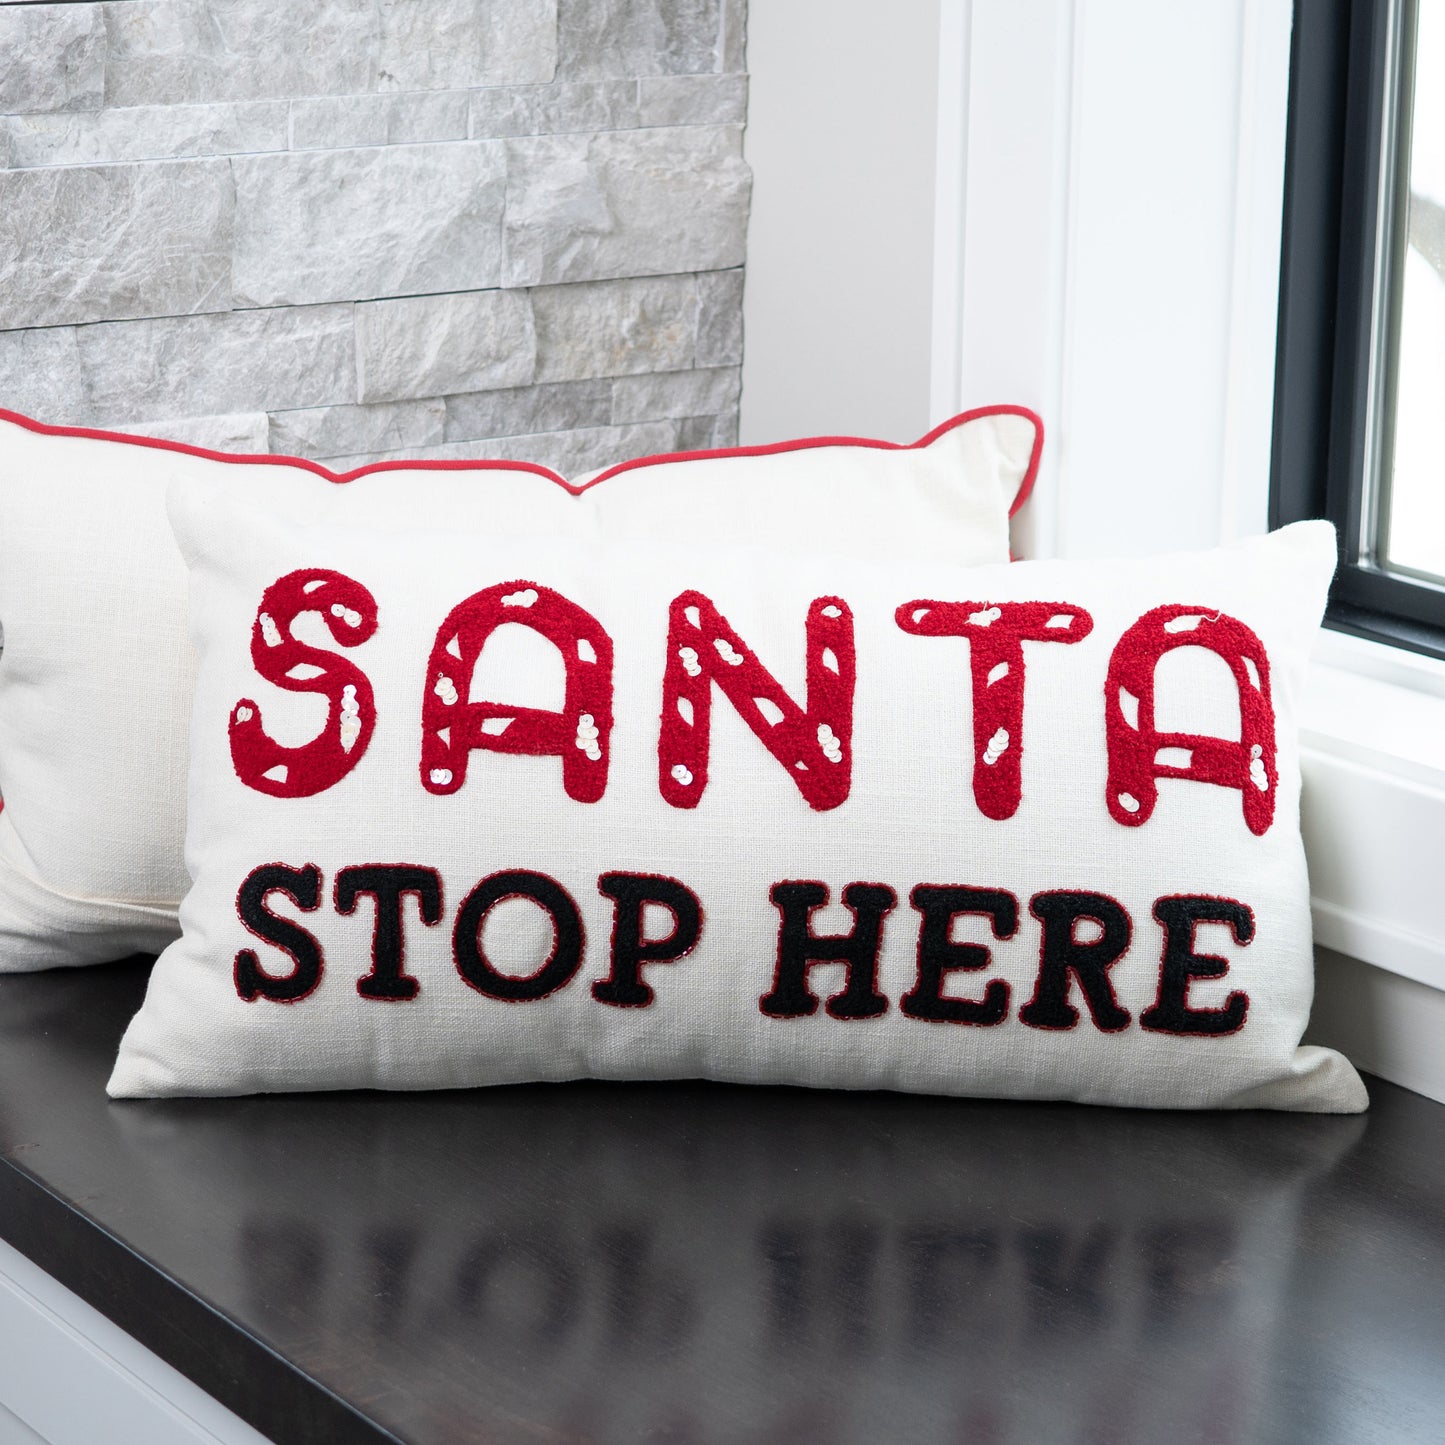 Christmas 12"x22" Santa Stop Here Embroidered Holiday Lumbar Pillow